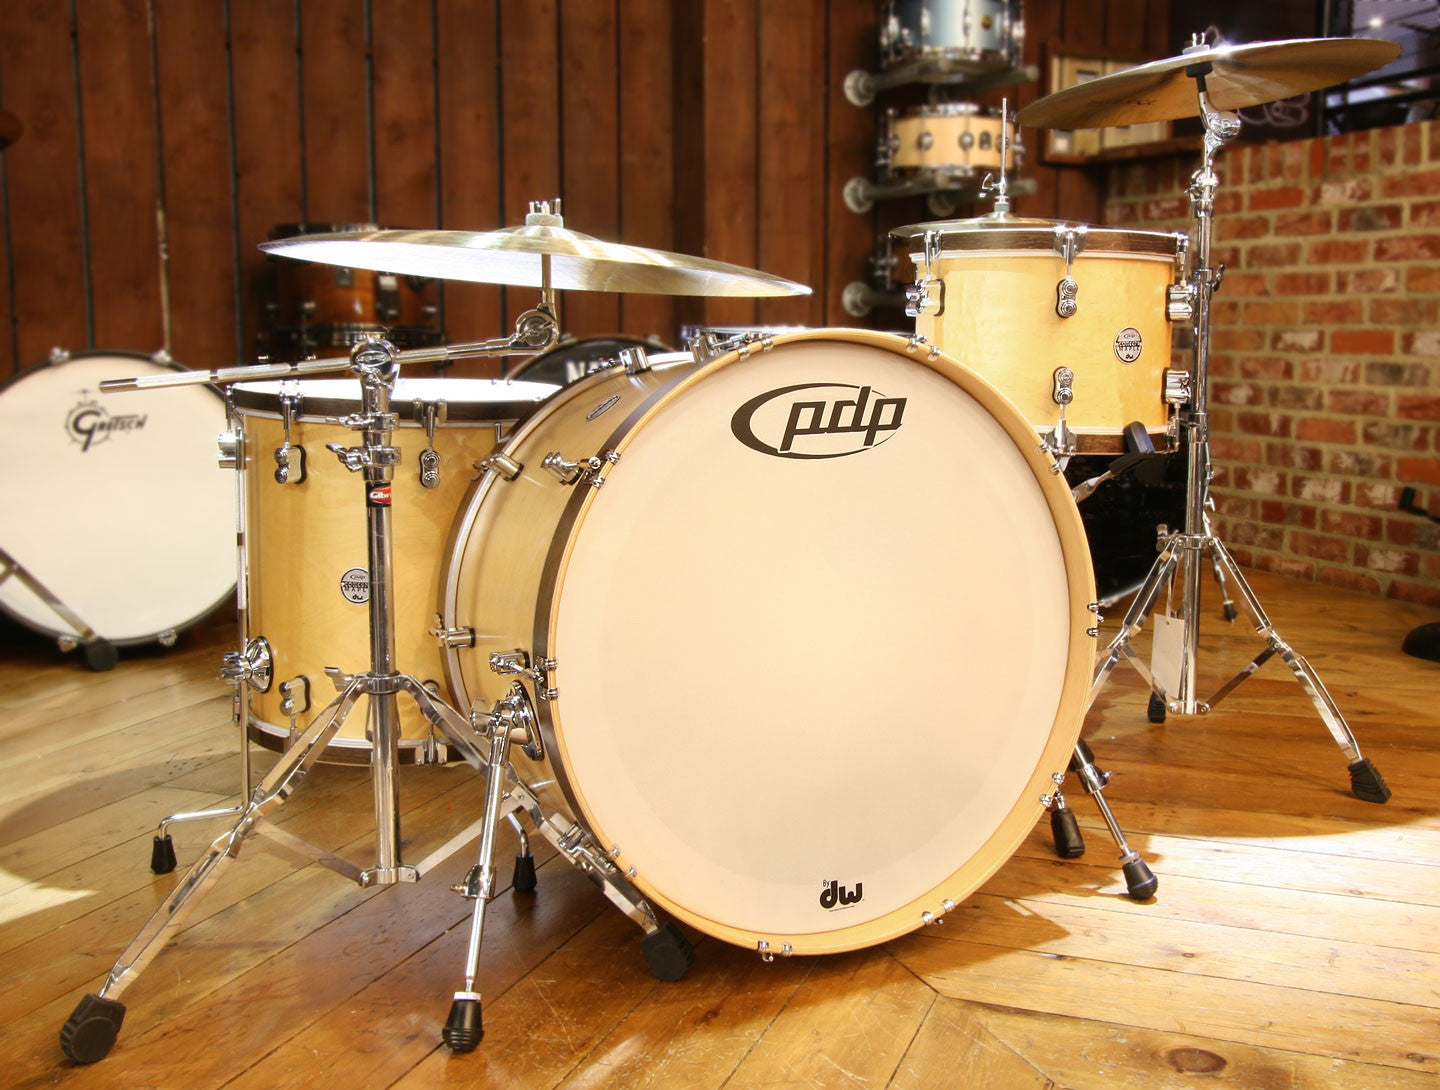 PDP Concept Maple Drum Kit at drumshop UK